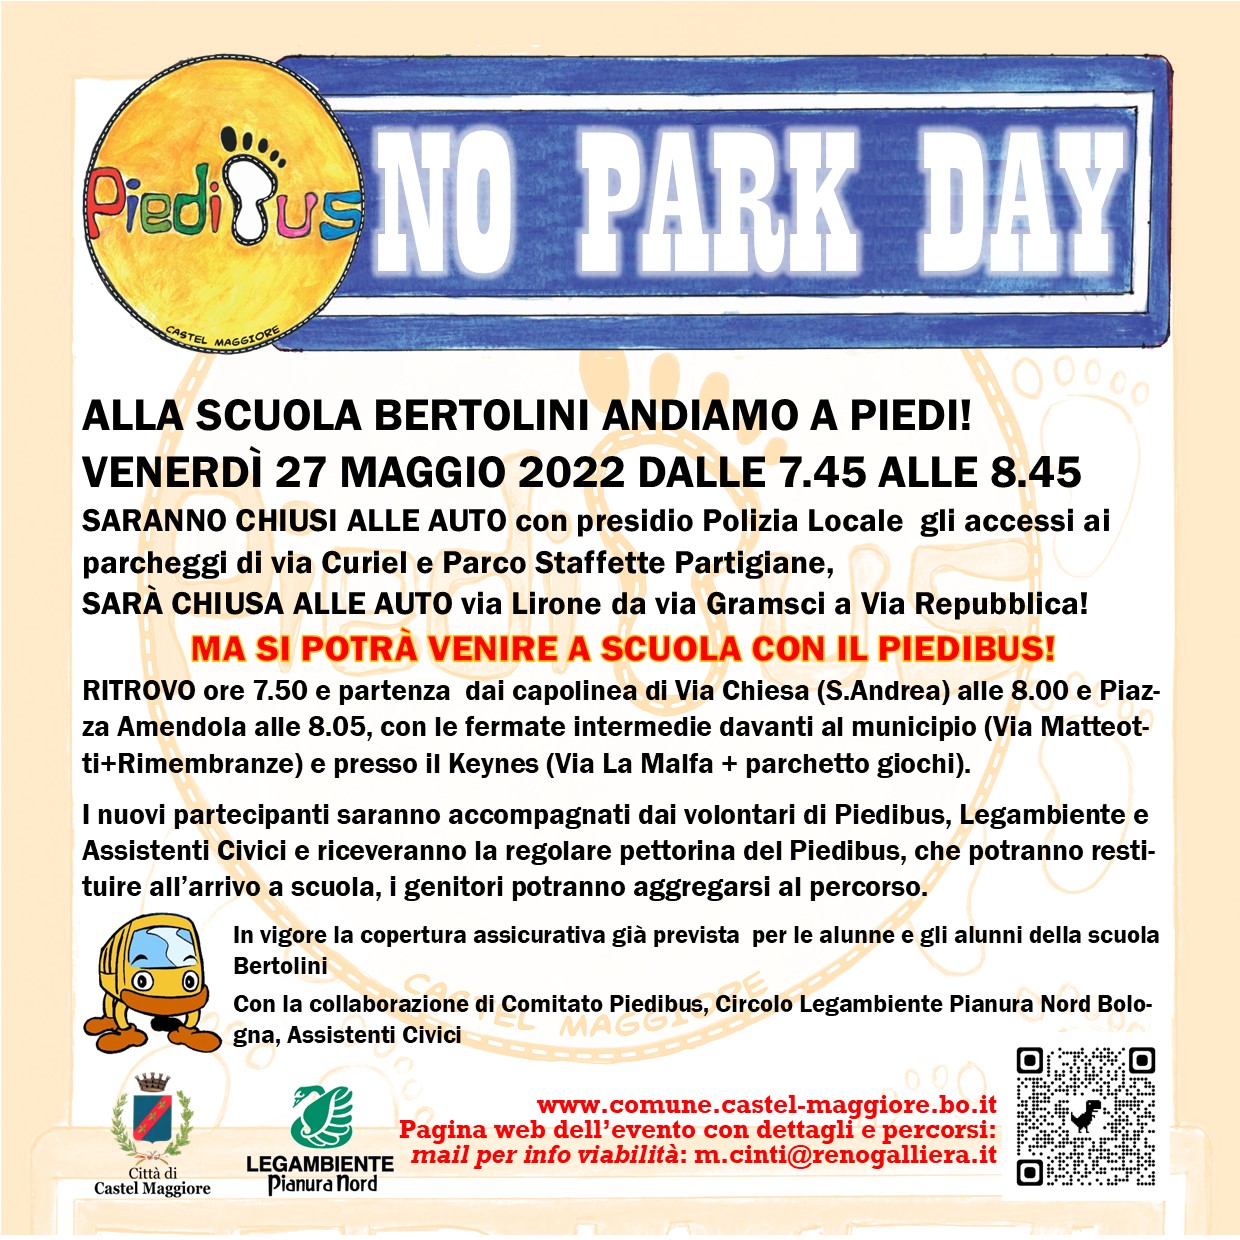 No Park Day